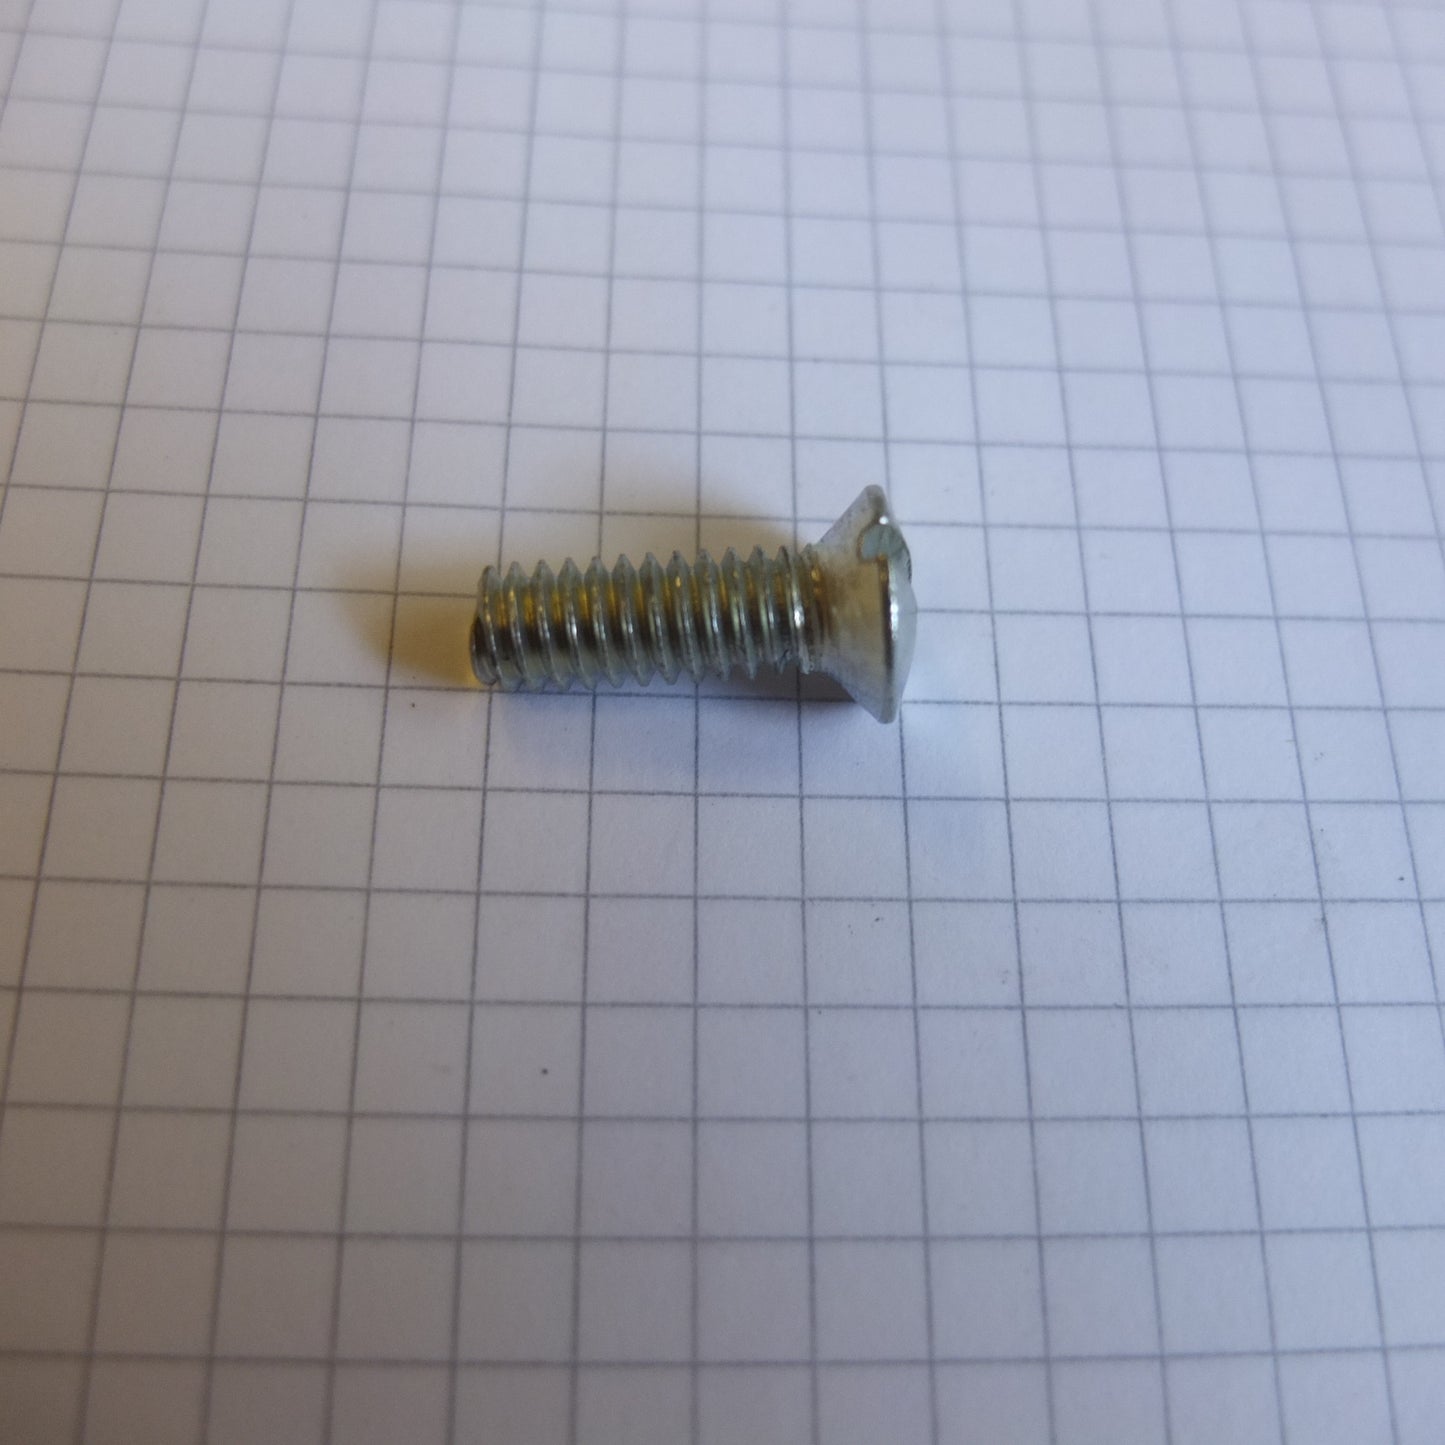 P1/011 Breather cover screw